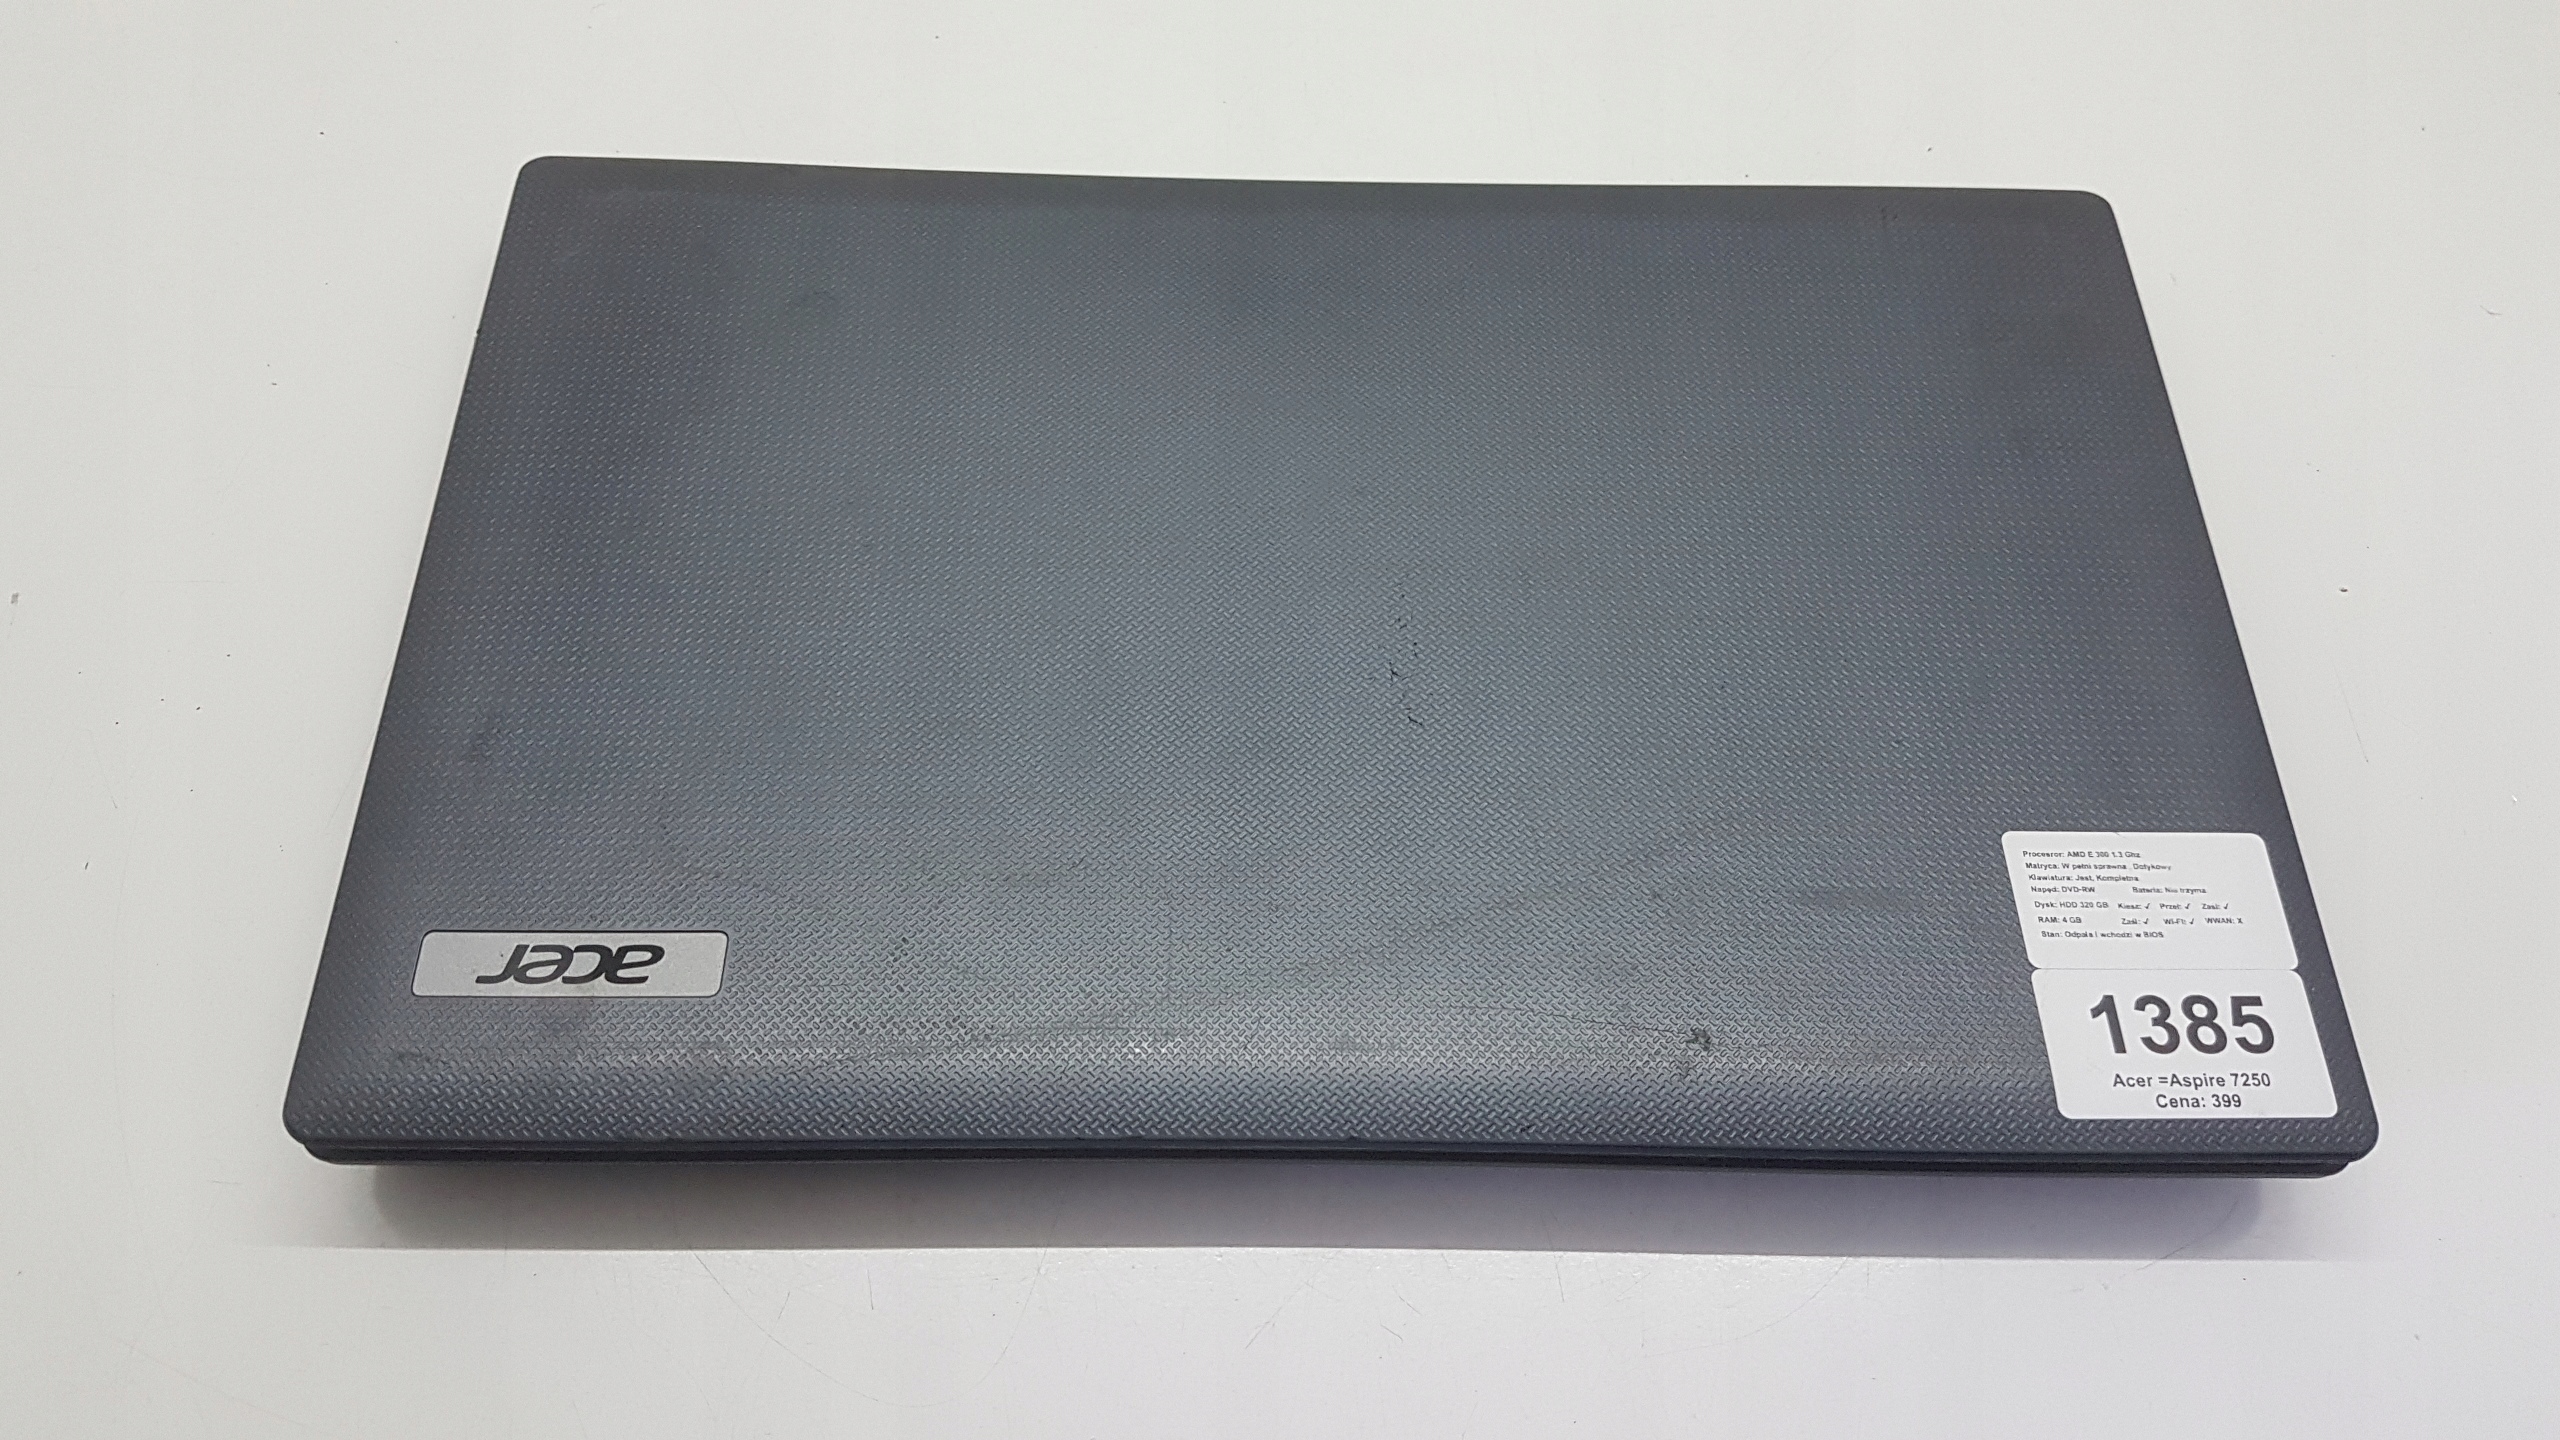 Notebook Acer Aspire 7250 (1385).